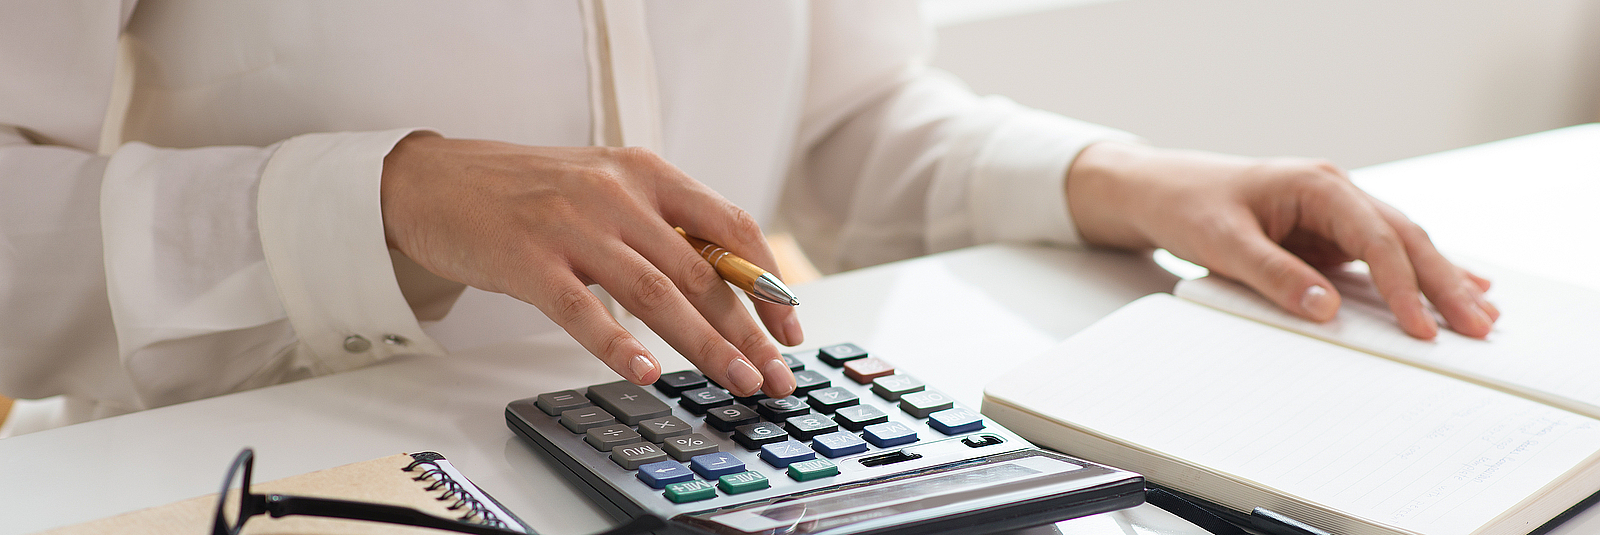 Closeup of woman calculating expenses